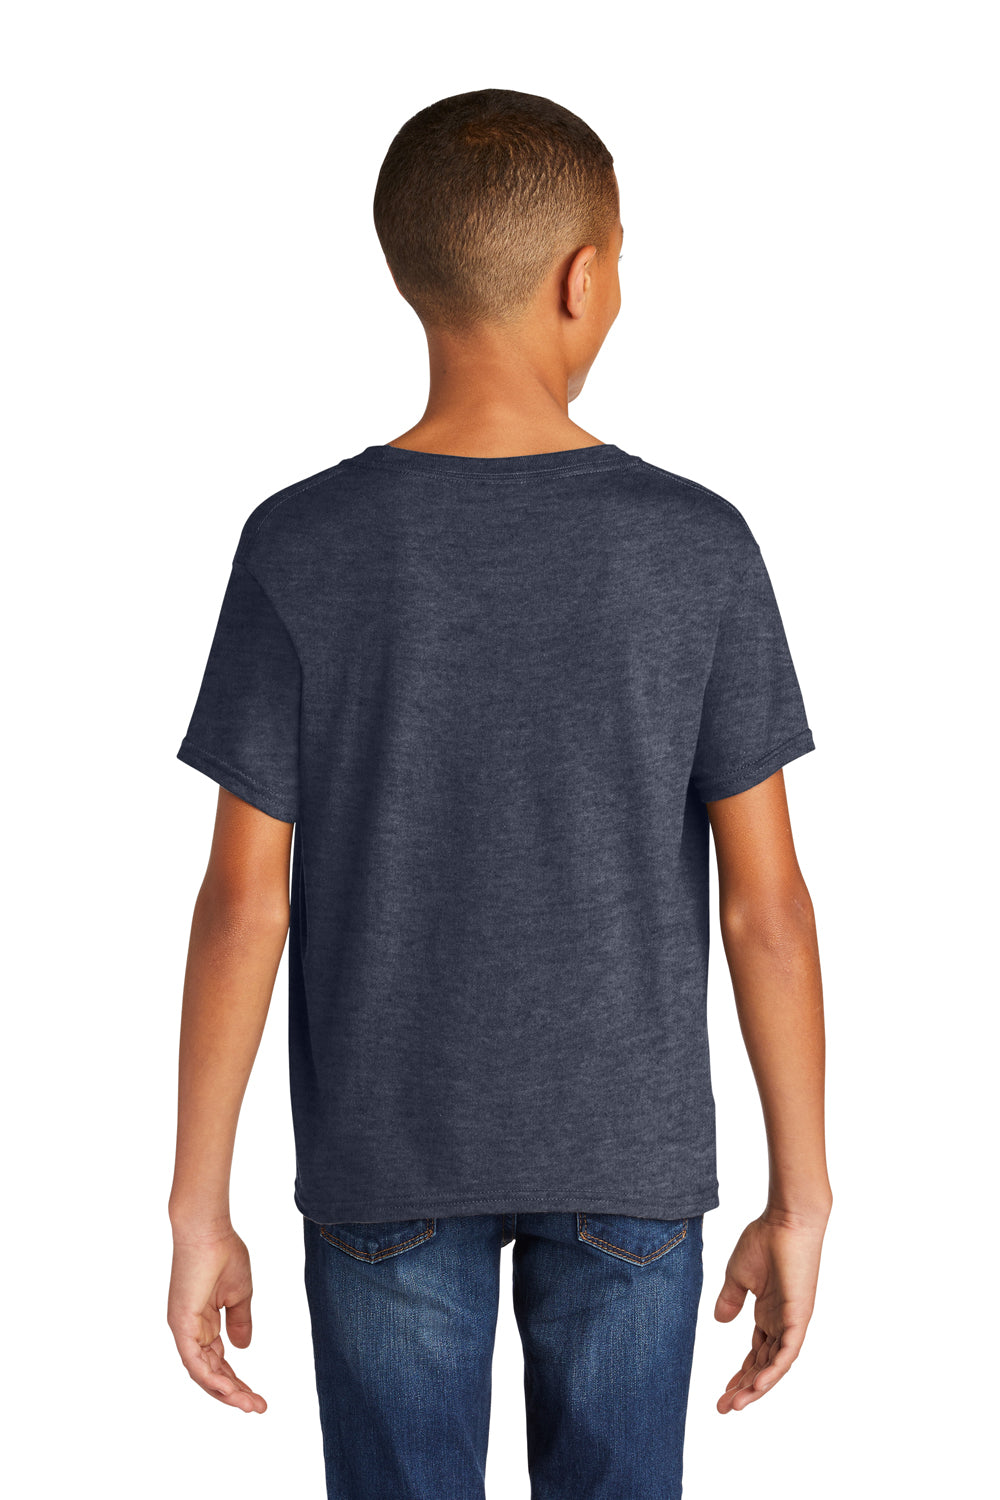 Gildan Youth Softstyle Short Sleeve Crewneck T-Shirt Heather Navy Blue Back